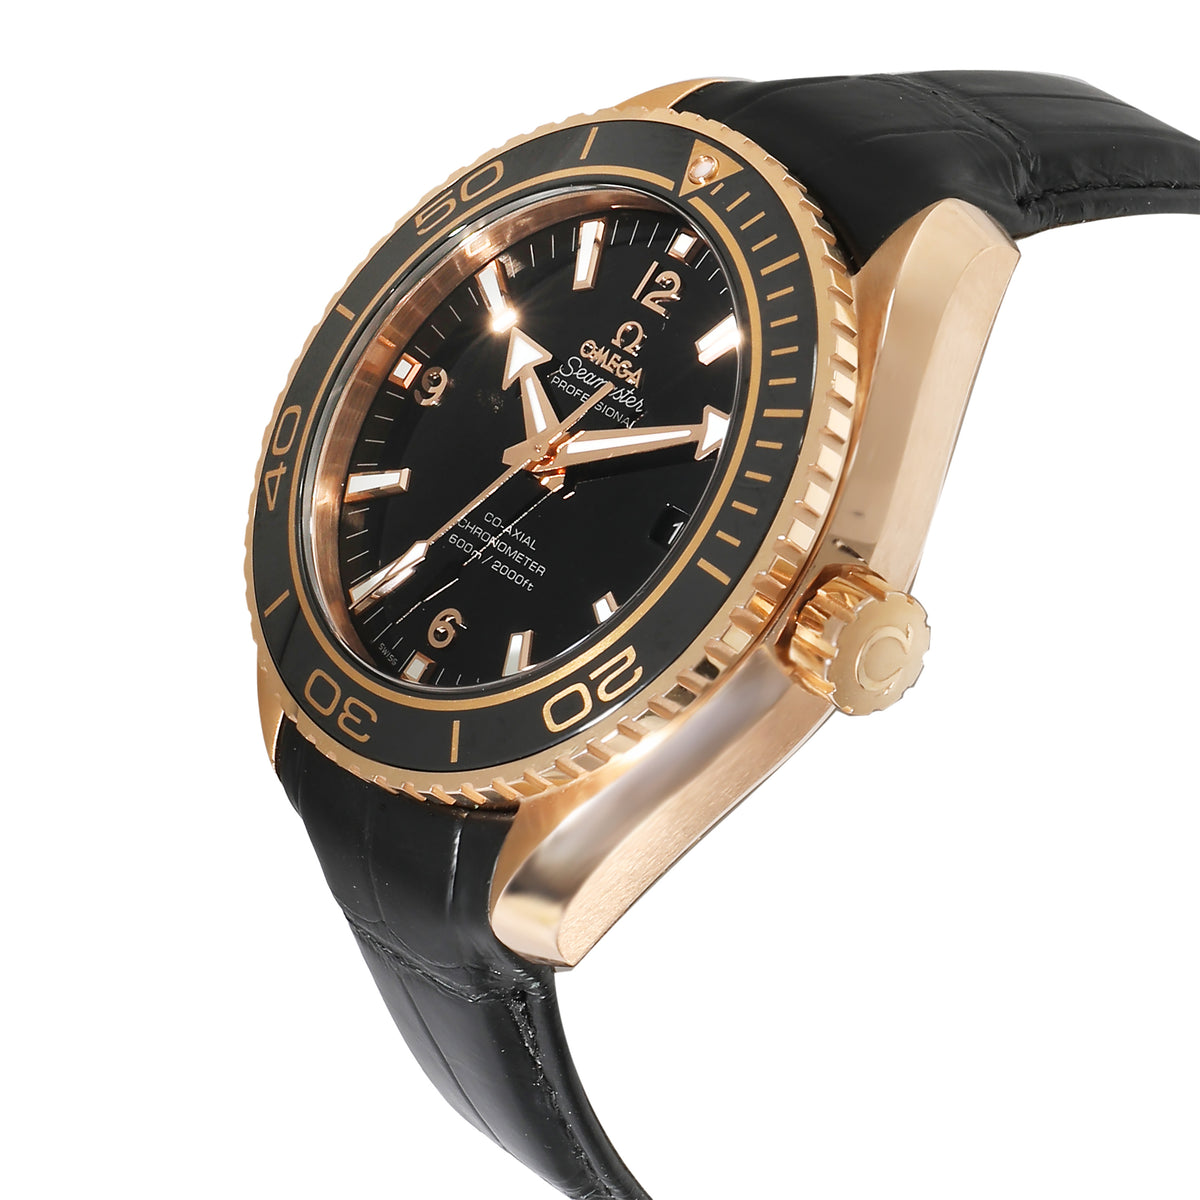 Seamaster Planet Ocean 232.63.46.21.01.001 Men's Watch in 18kt Rose Gold